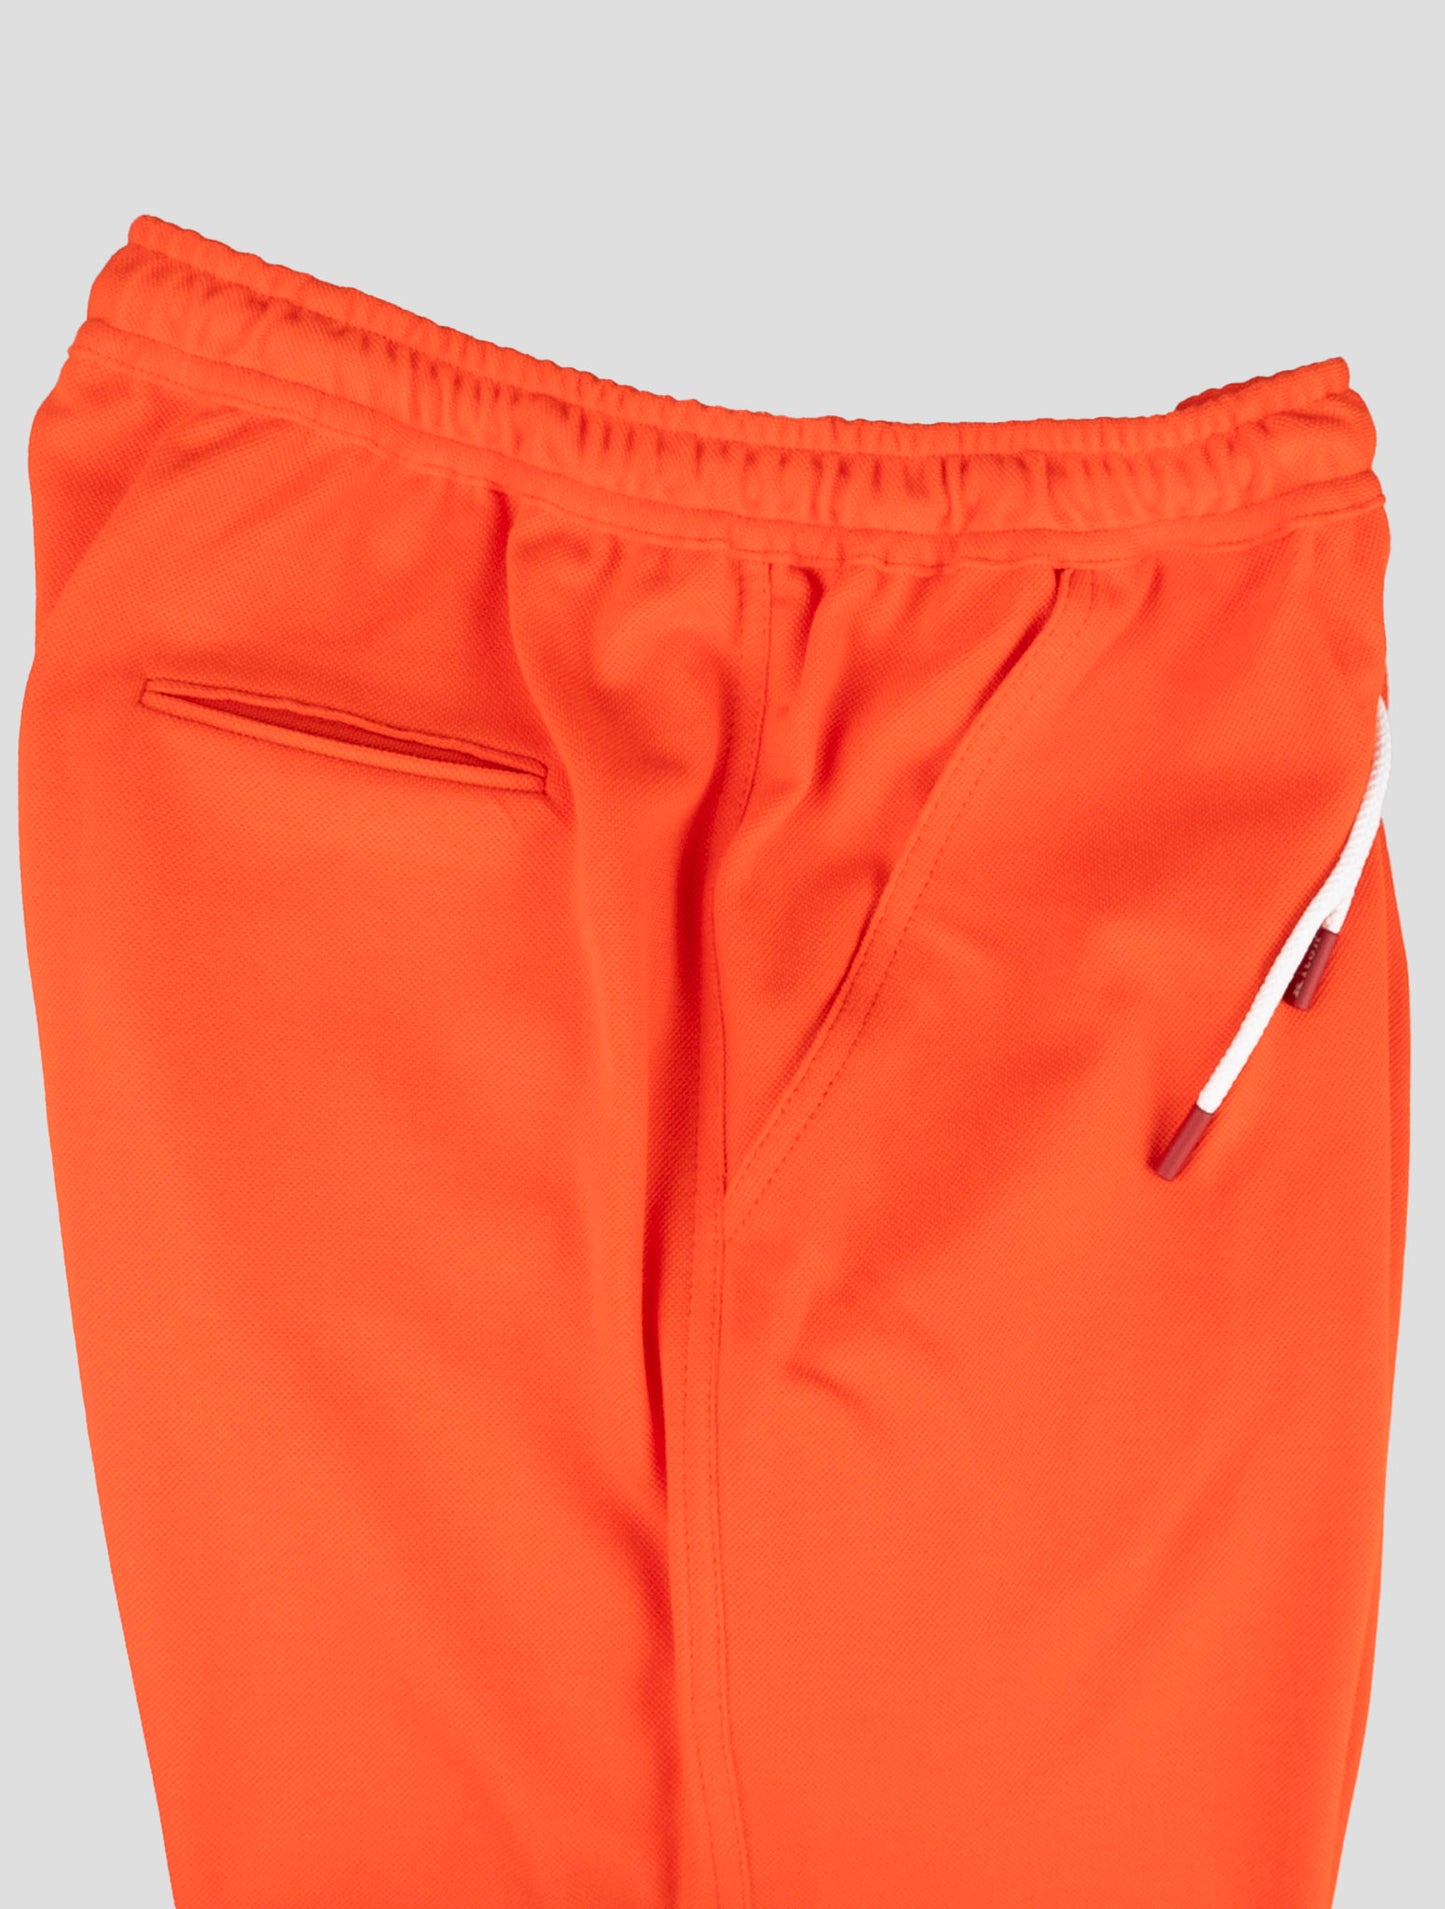 Kiton Matching Outfit - Blue Umbi and Orange Short Pants Tracksuit